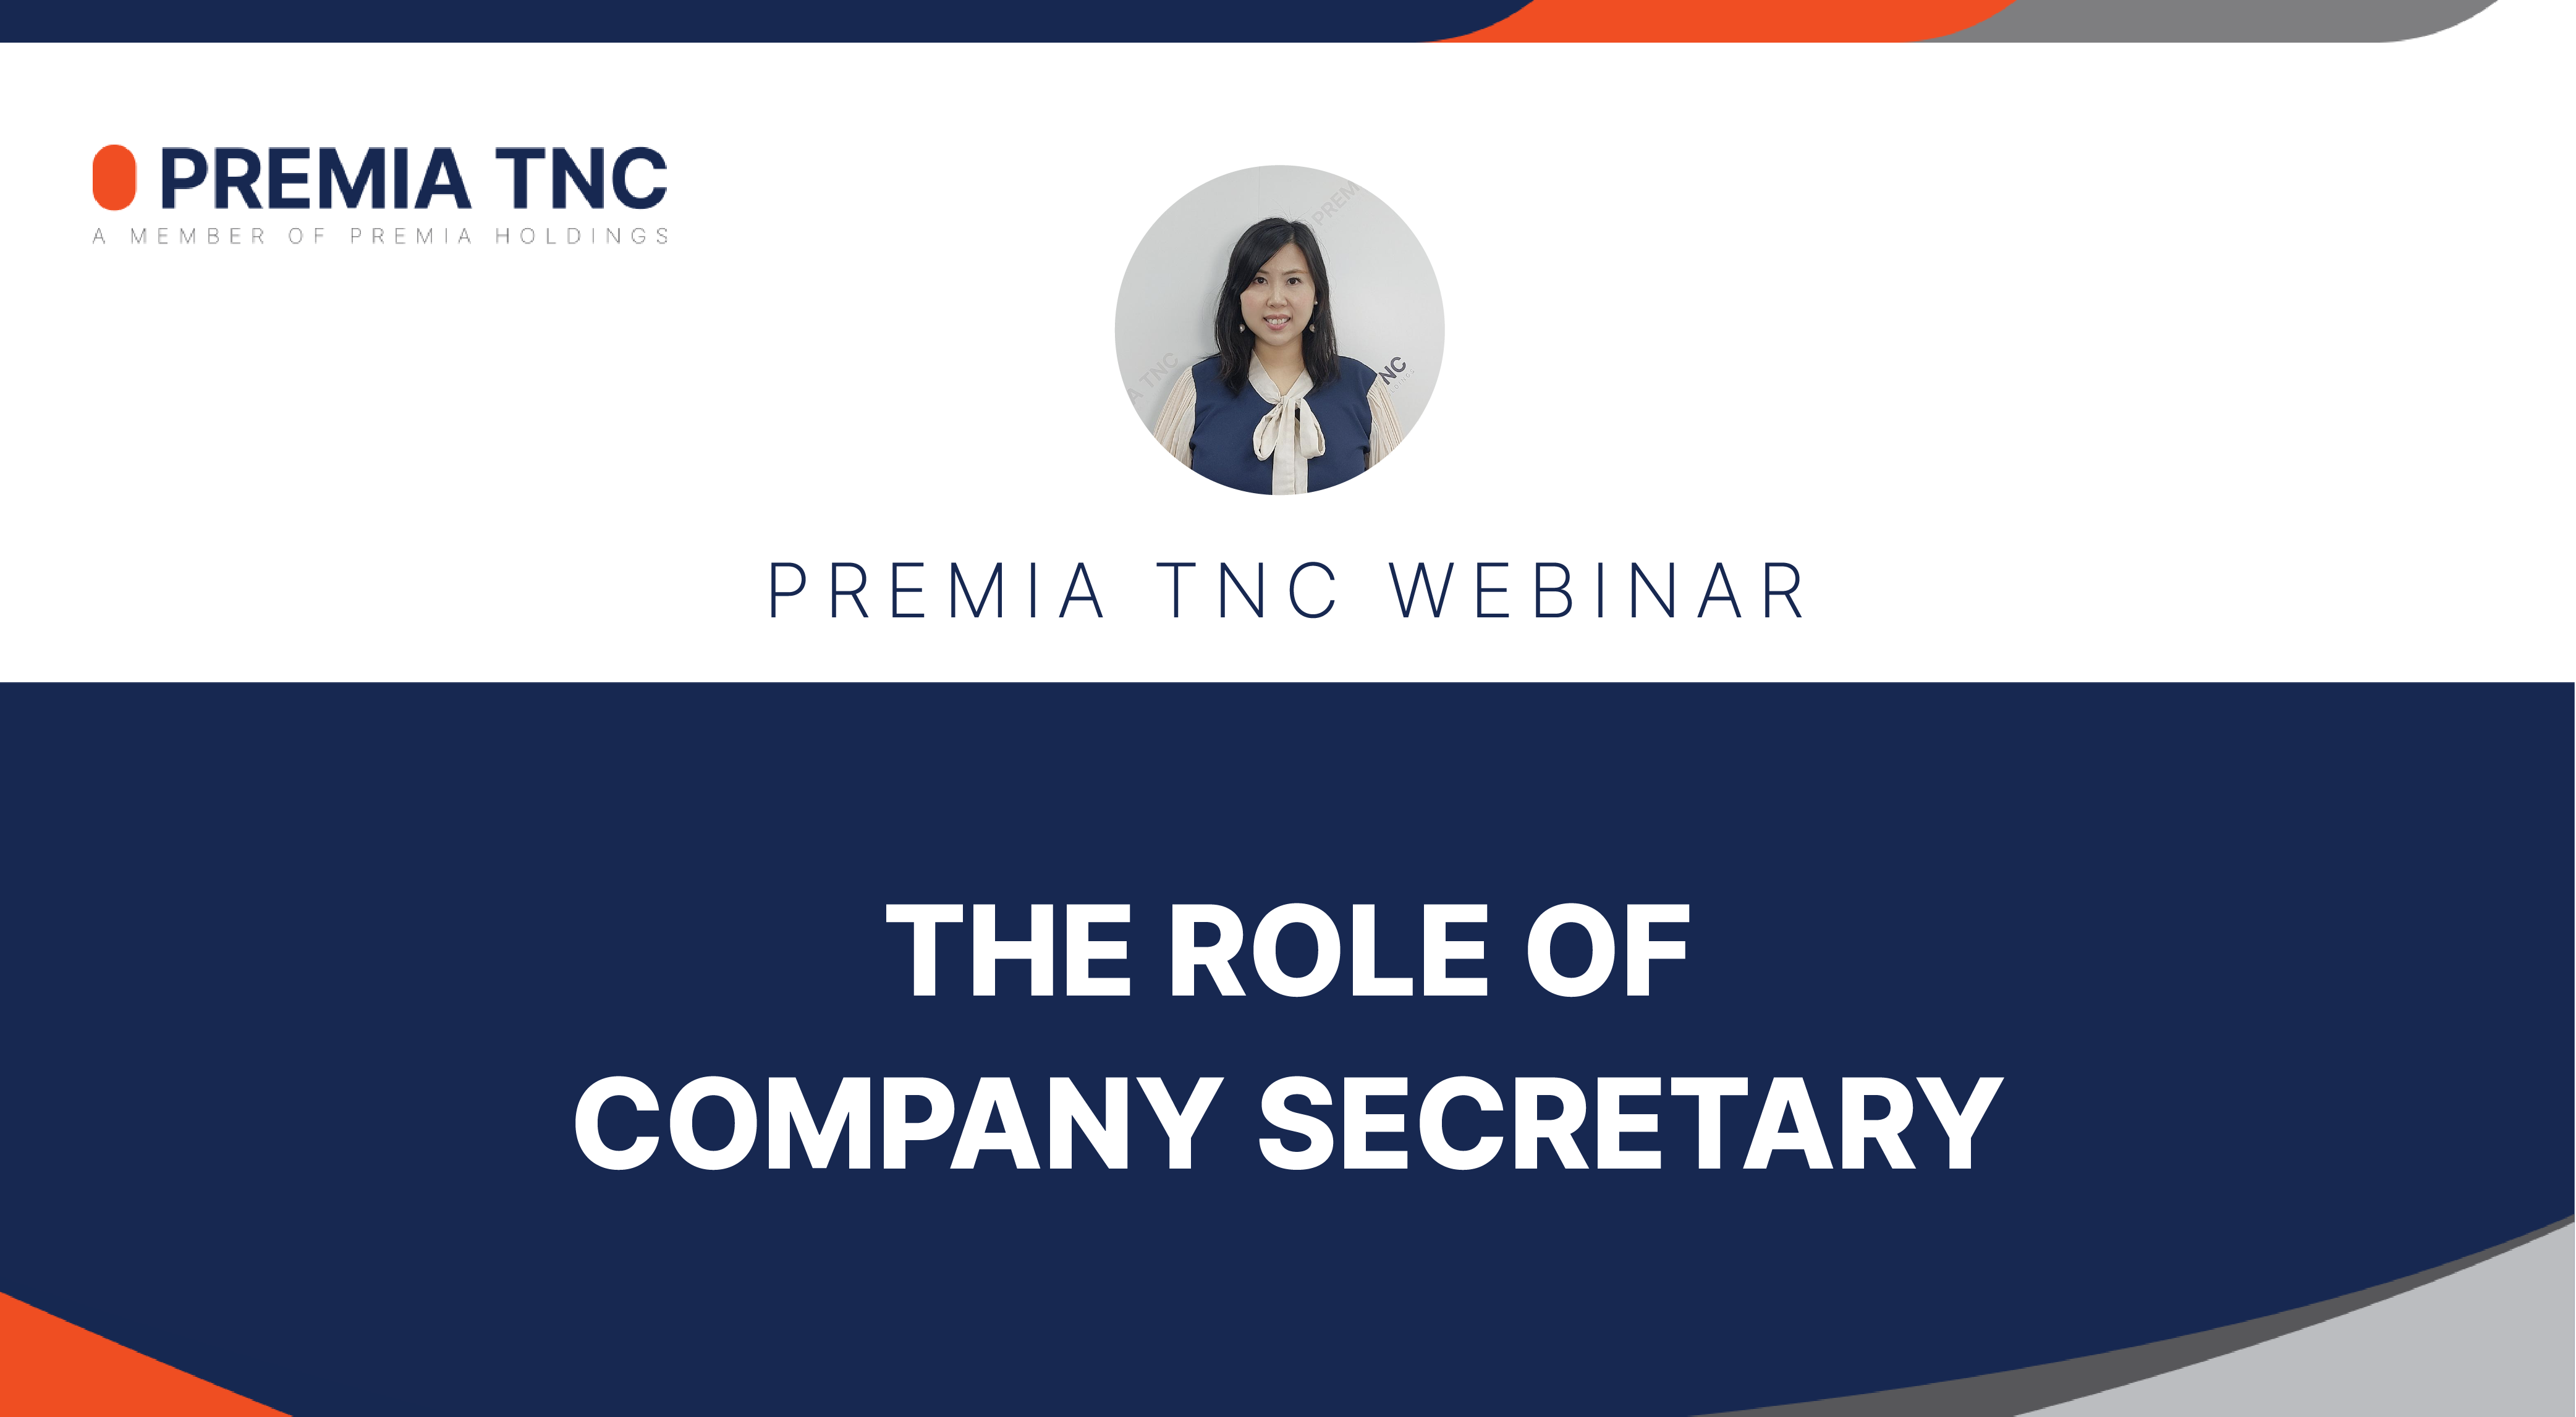 The role of company secretary